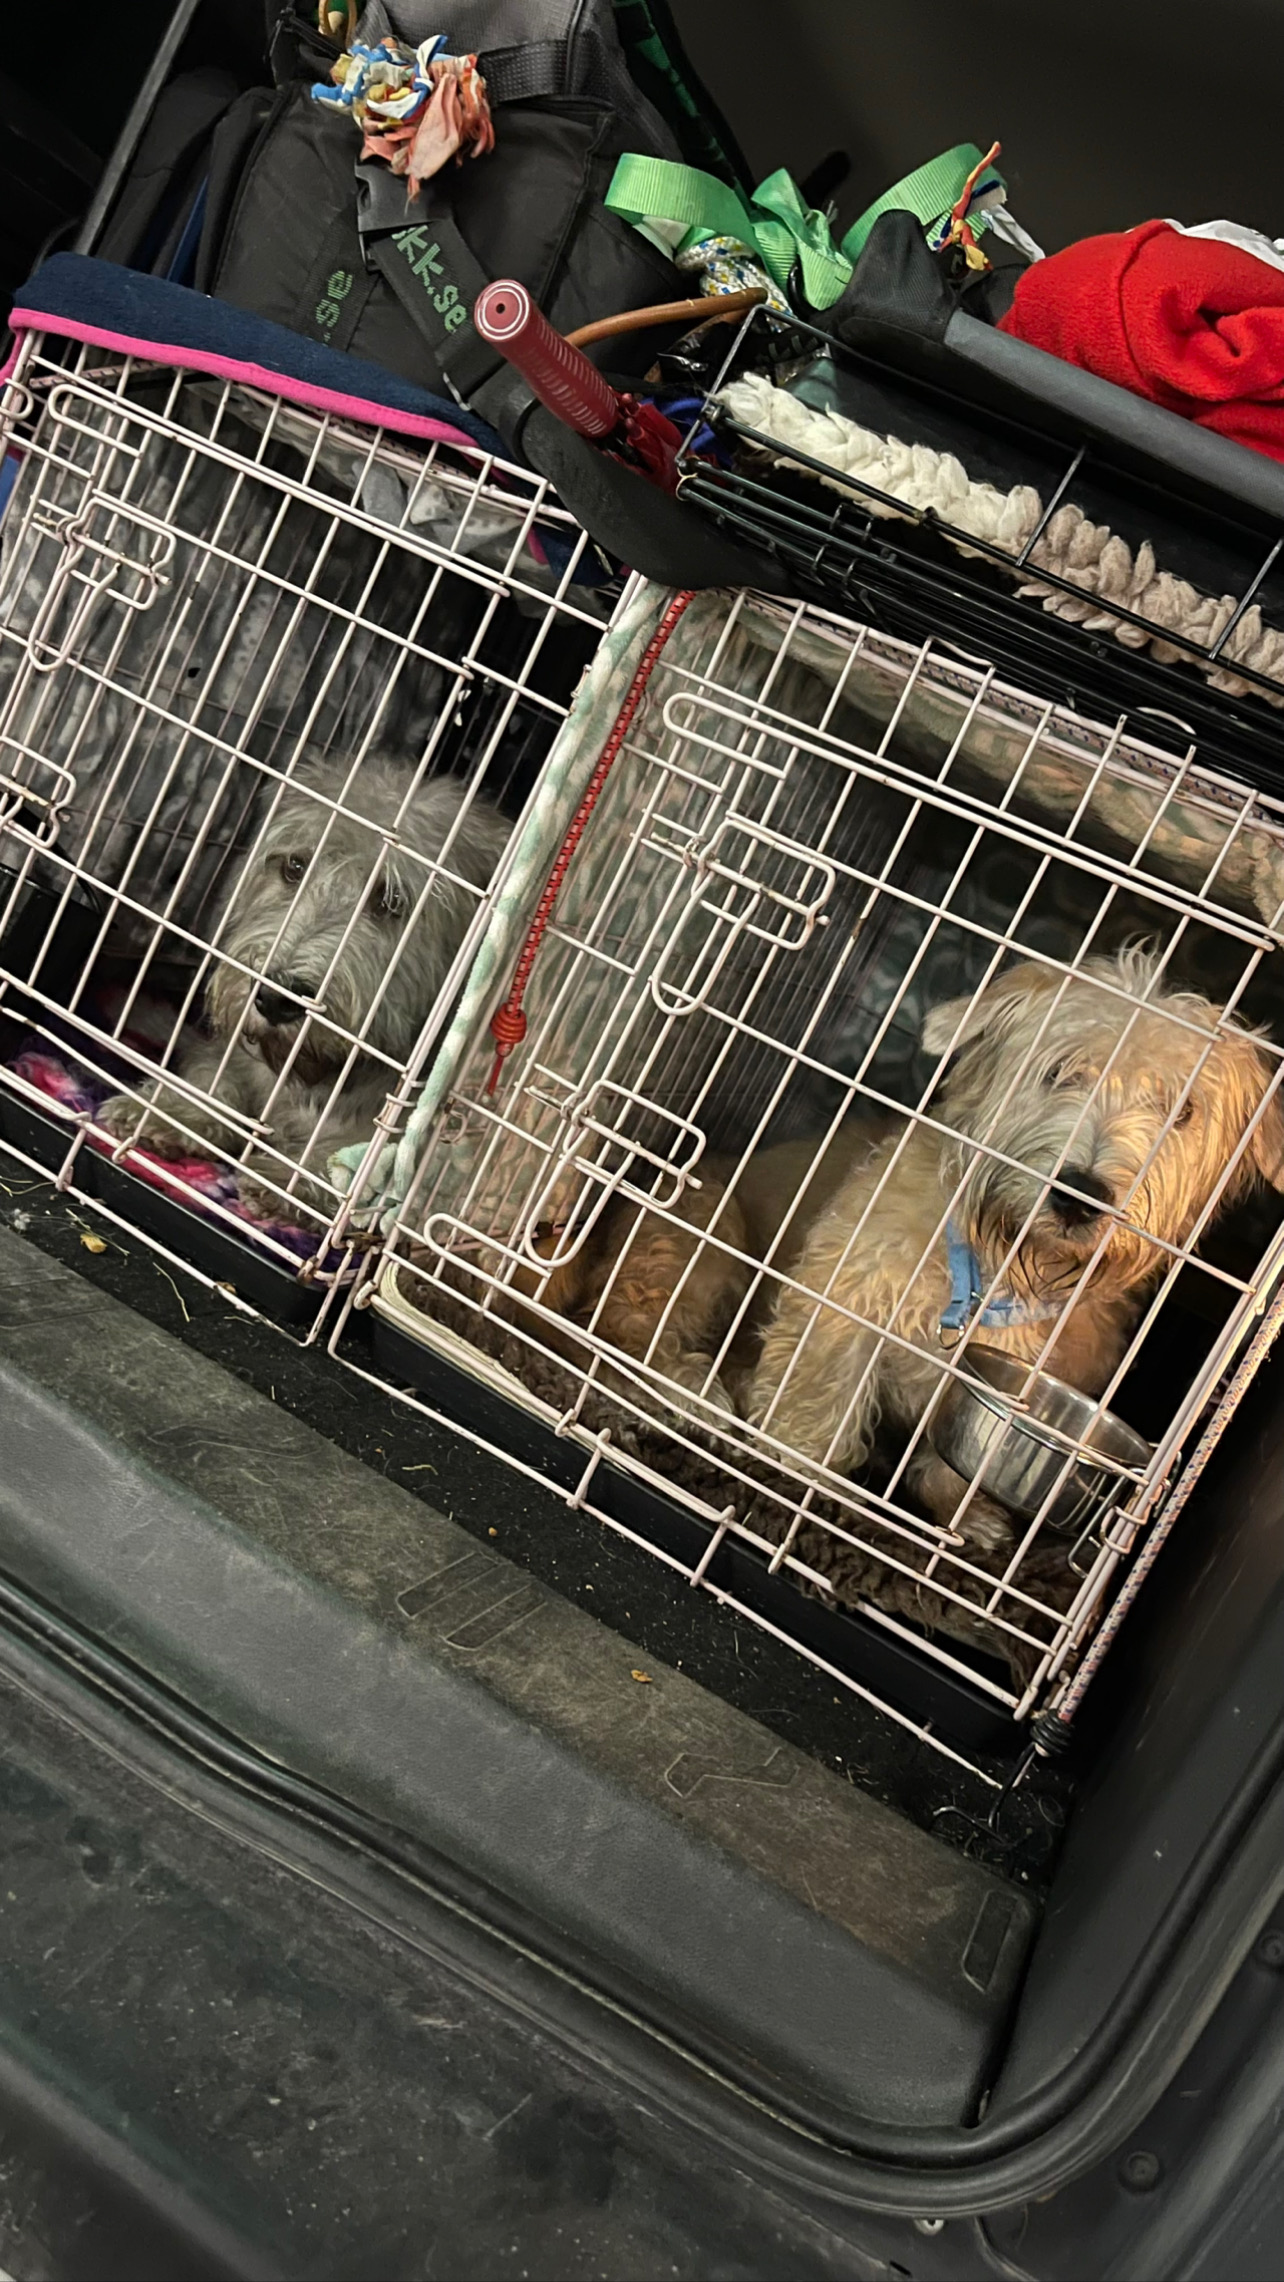 Flight Pet Nanny transporting two Glen of Imaal Terriers from Atlanta, GA to Tallin, Estonia